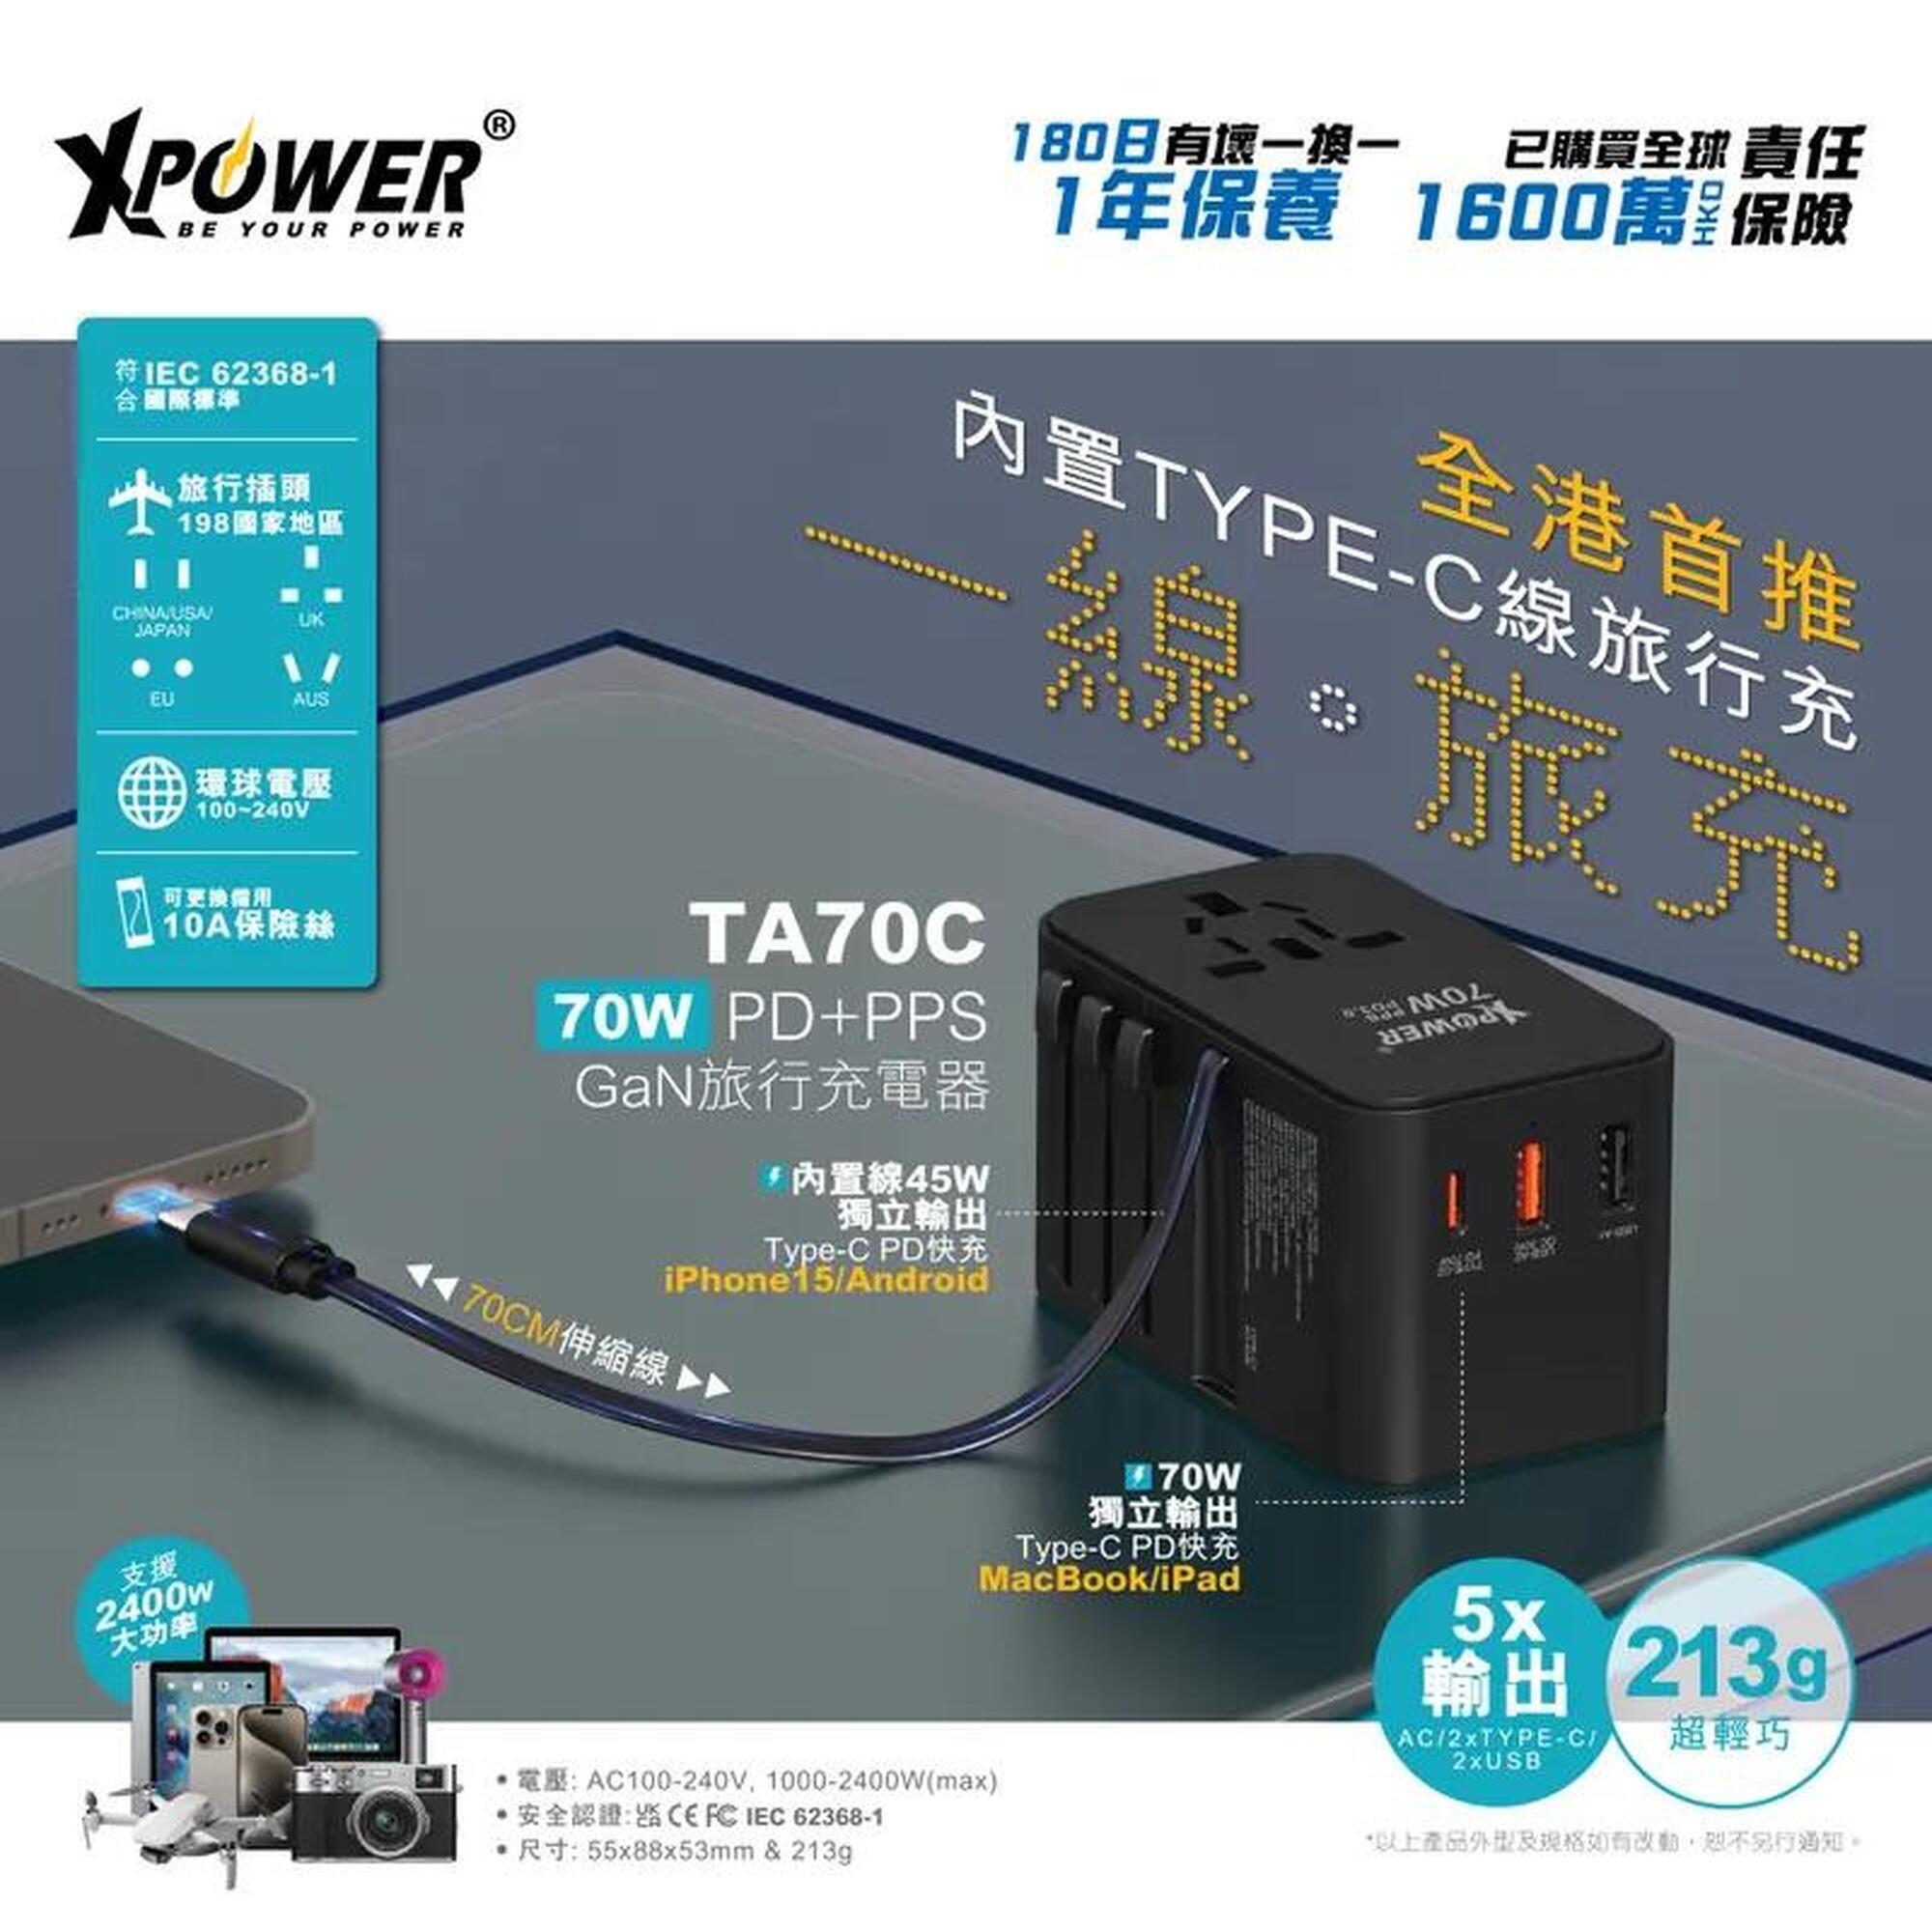 XPower TA70C 6輸出PD/PPS 70W Gan旅行充電器 - 黑色